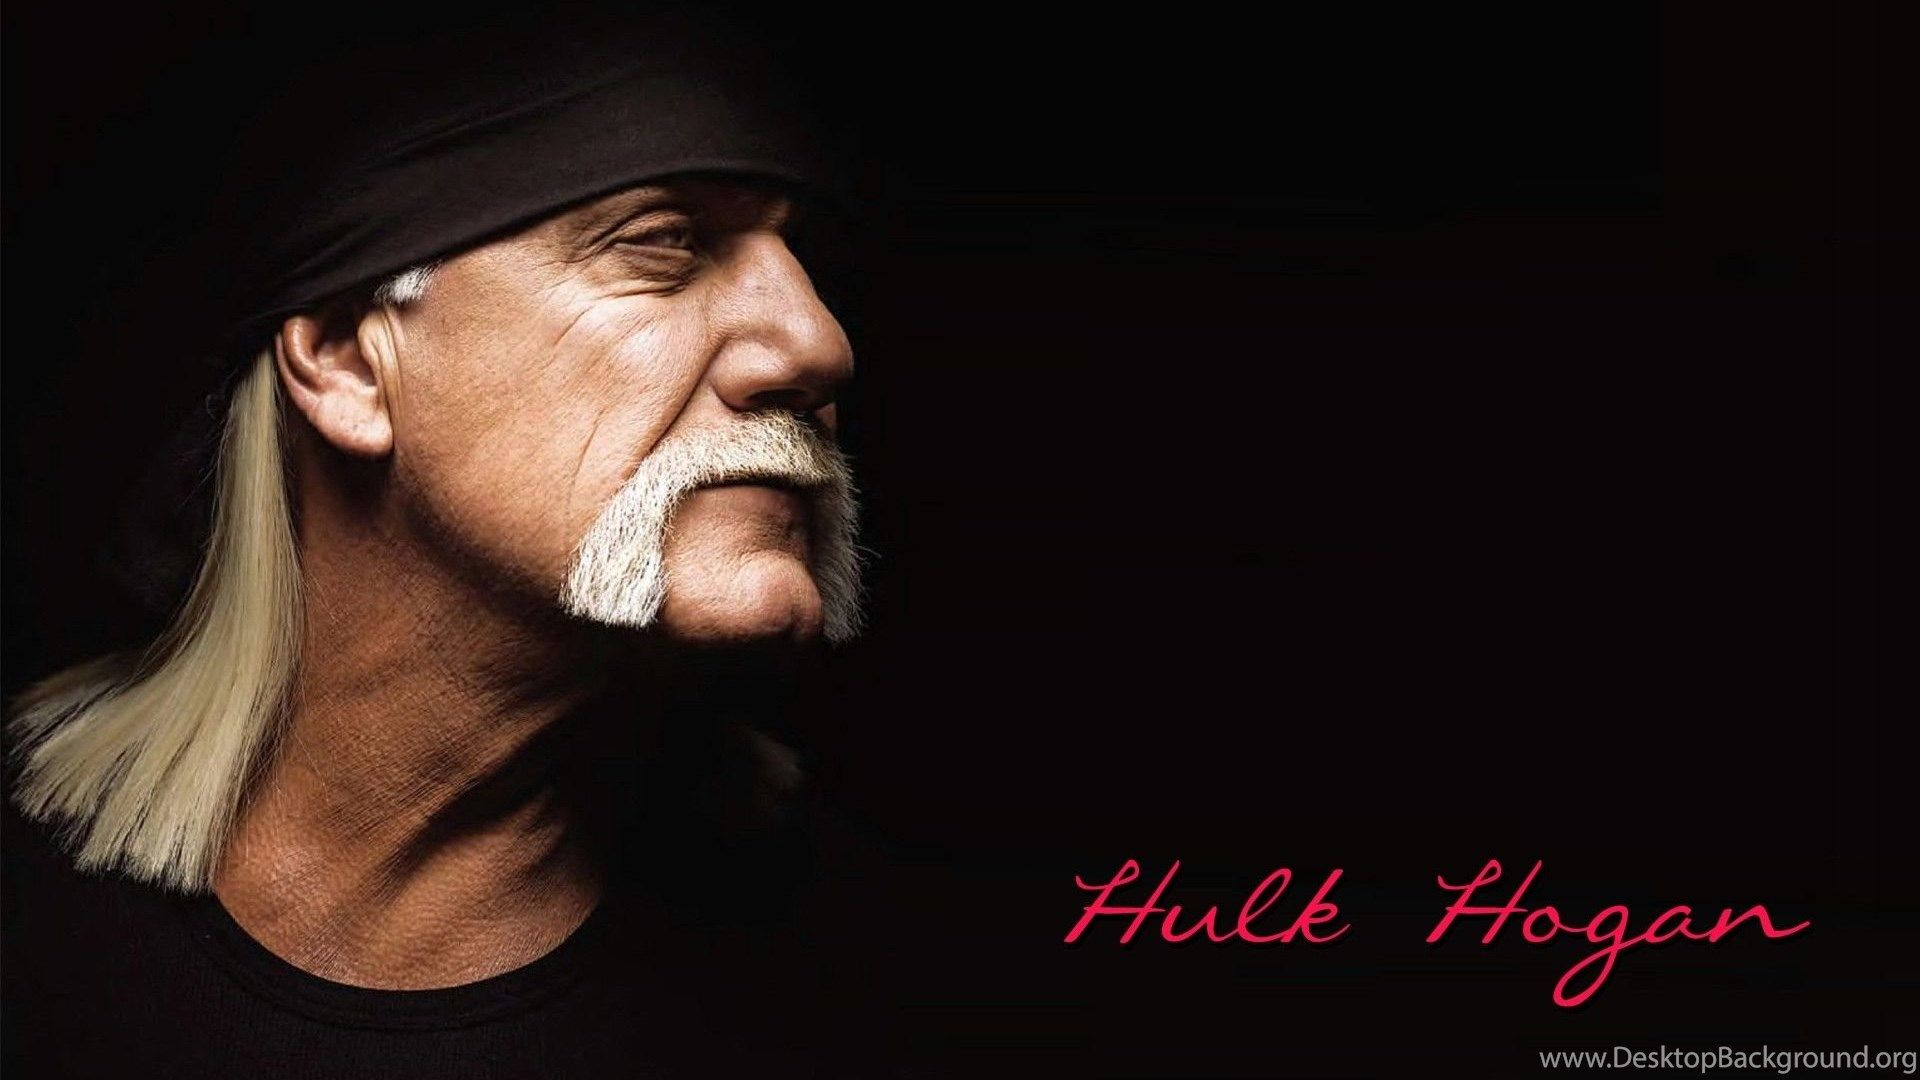 Hulk Hogan Wallpaper Free Download Desktop Background